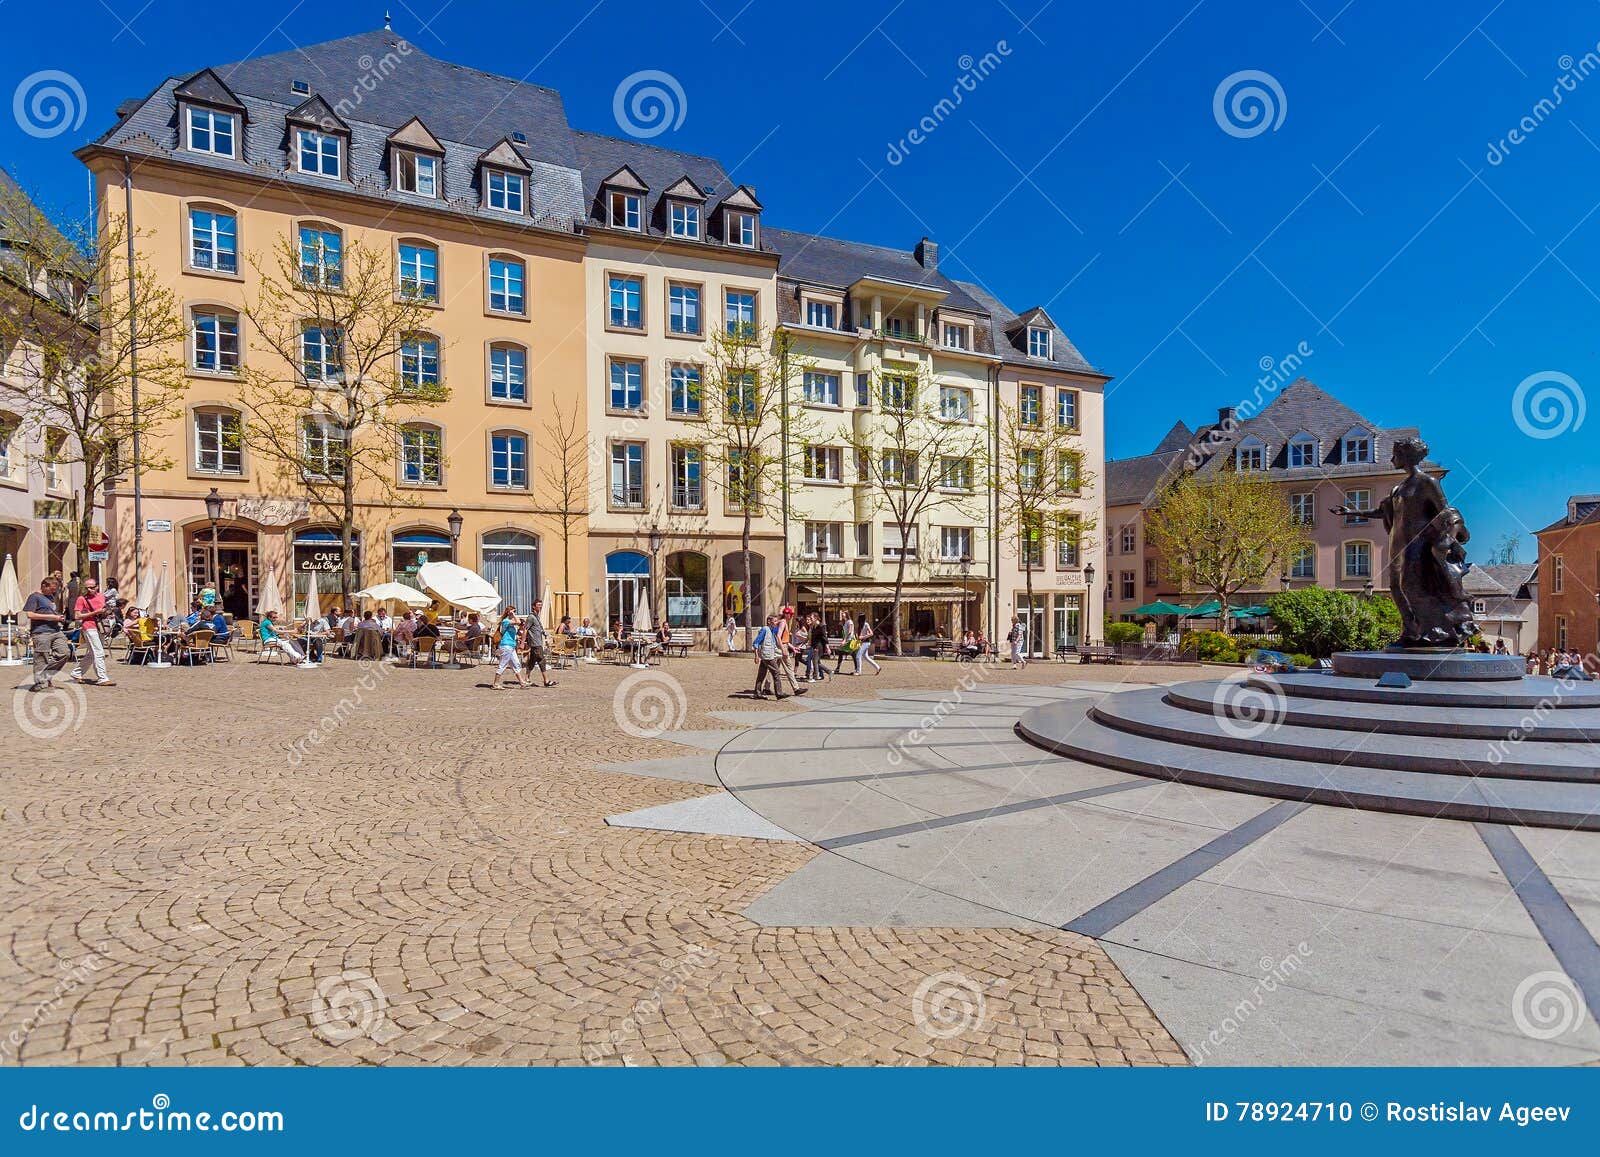 Place de Clairefontaine - Visit Luxembourg City